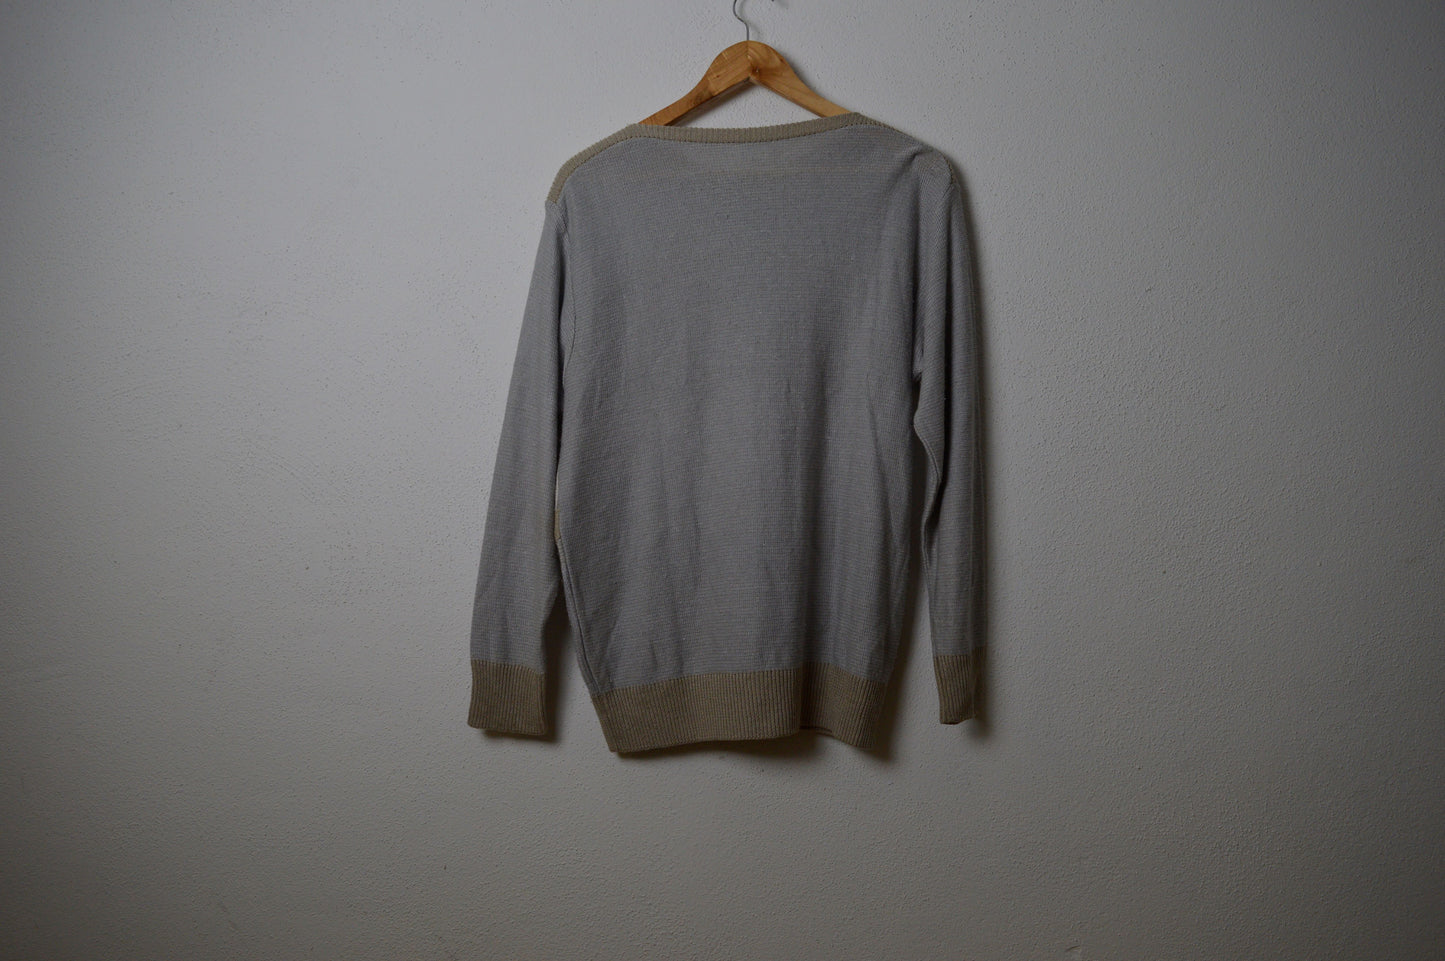 März Sweater